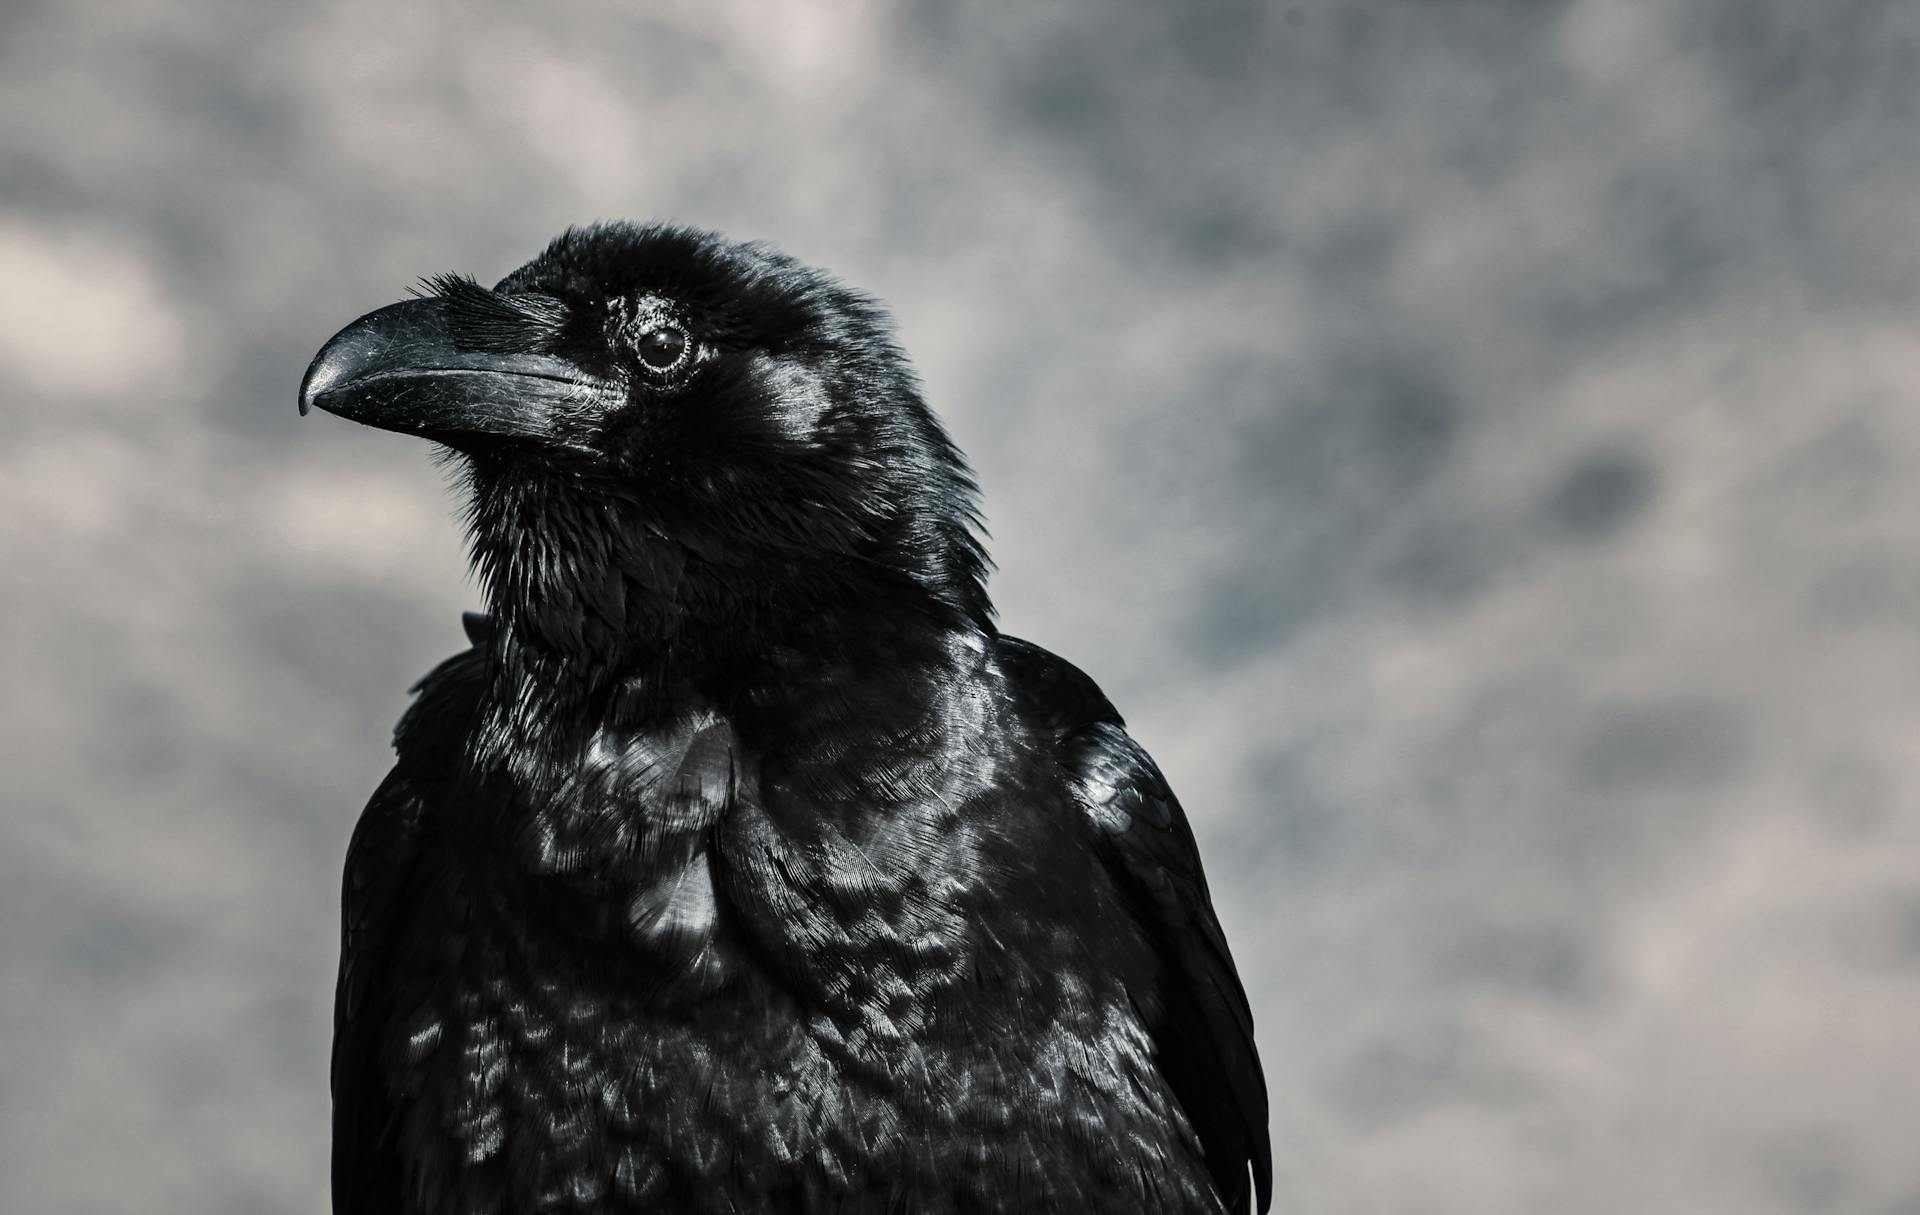 A black crow | Source: Pexels